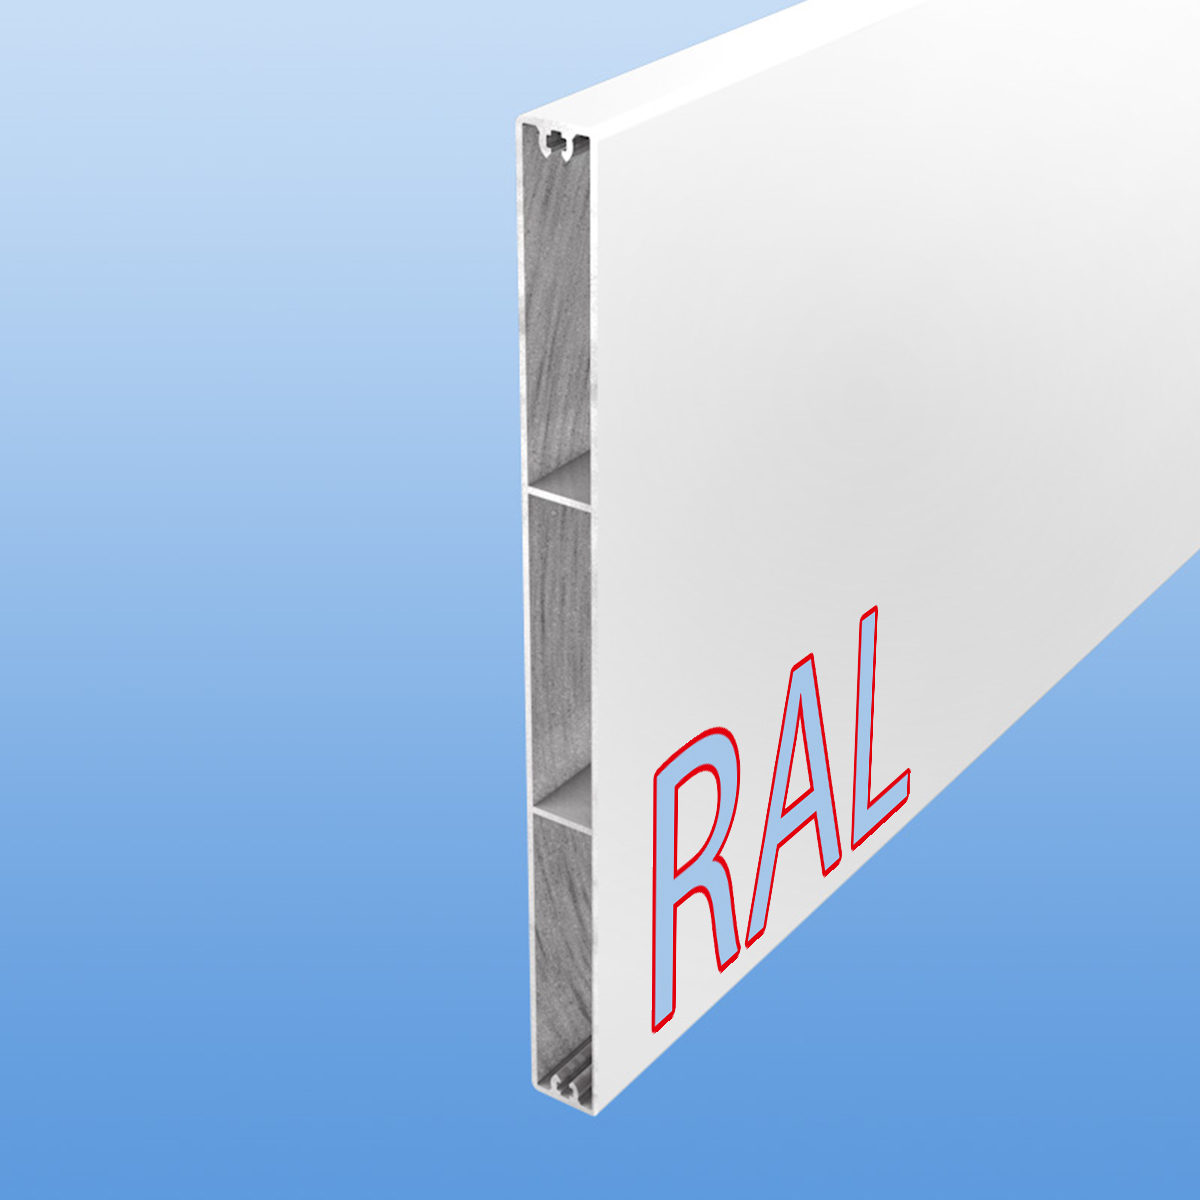 Balkonbretter aus Aluminium 200 mm breit nach RAL - Grautöne